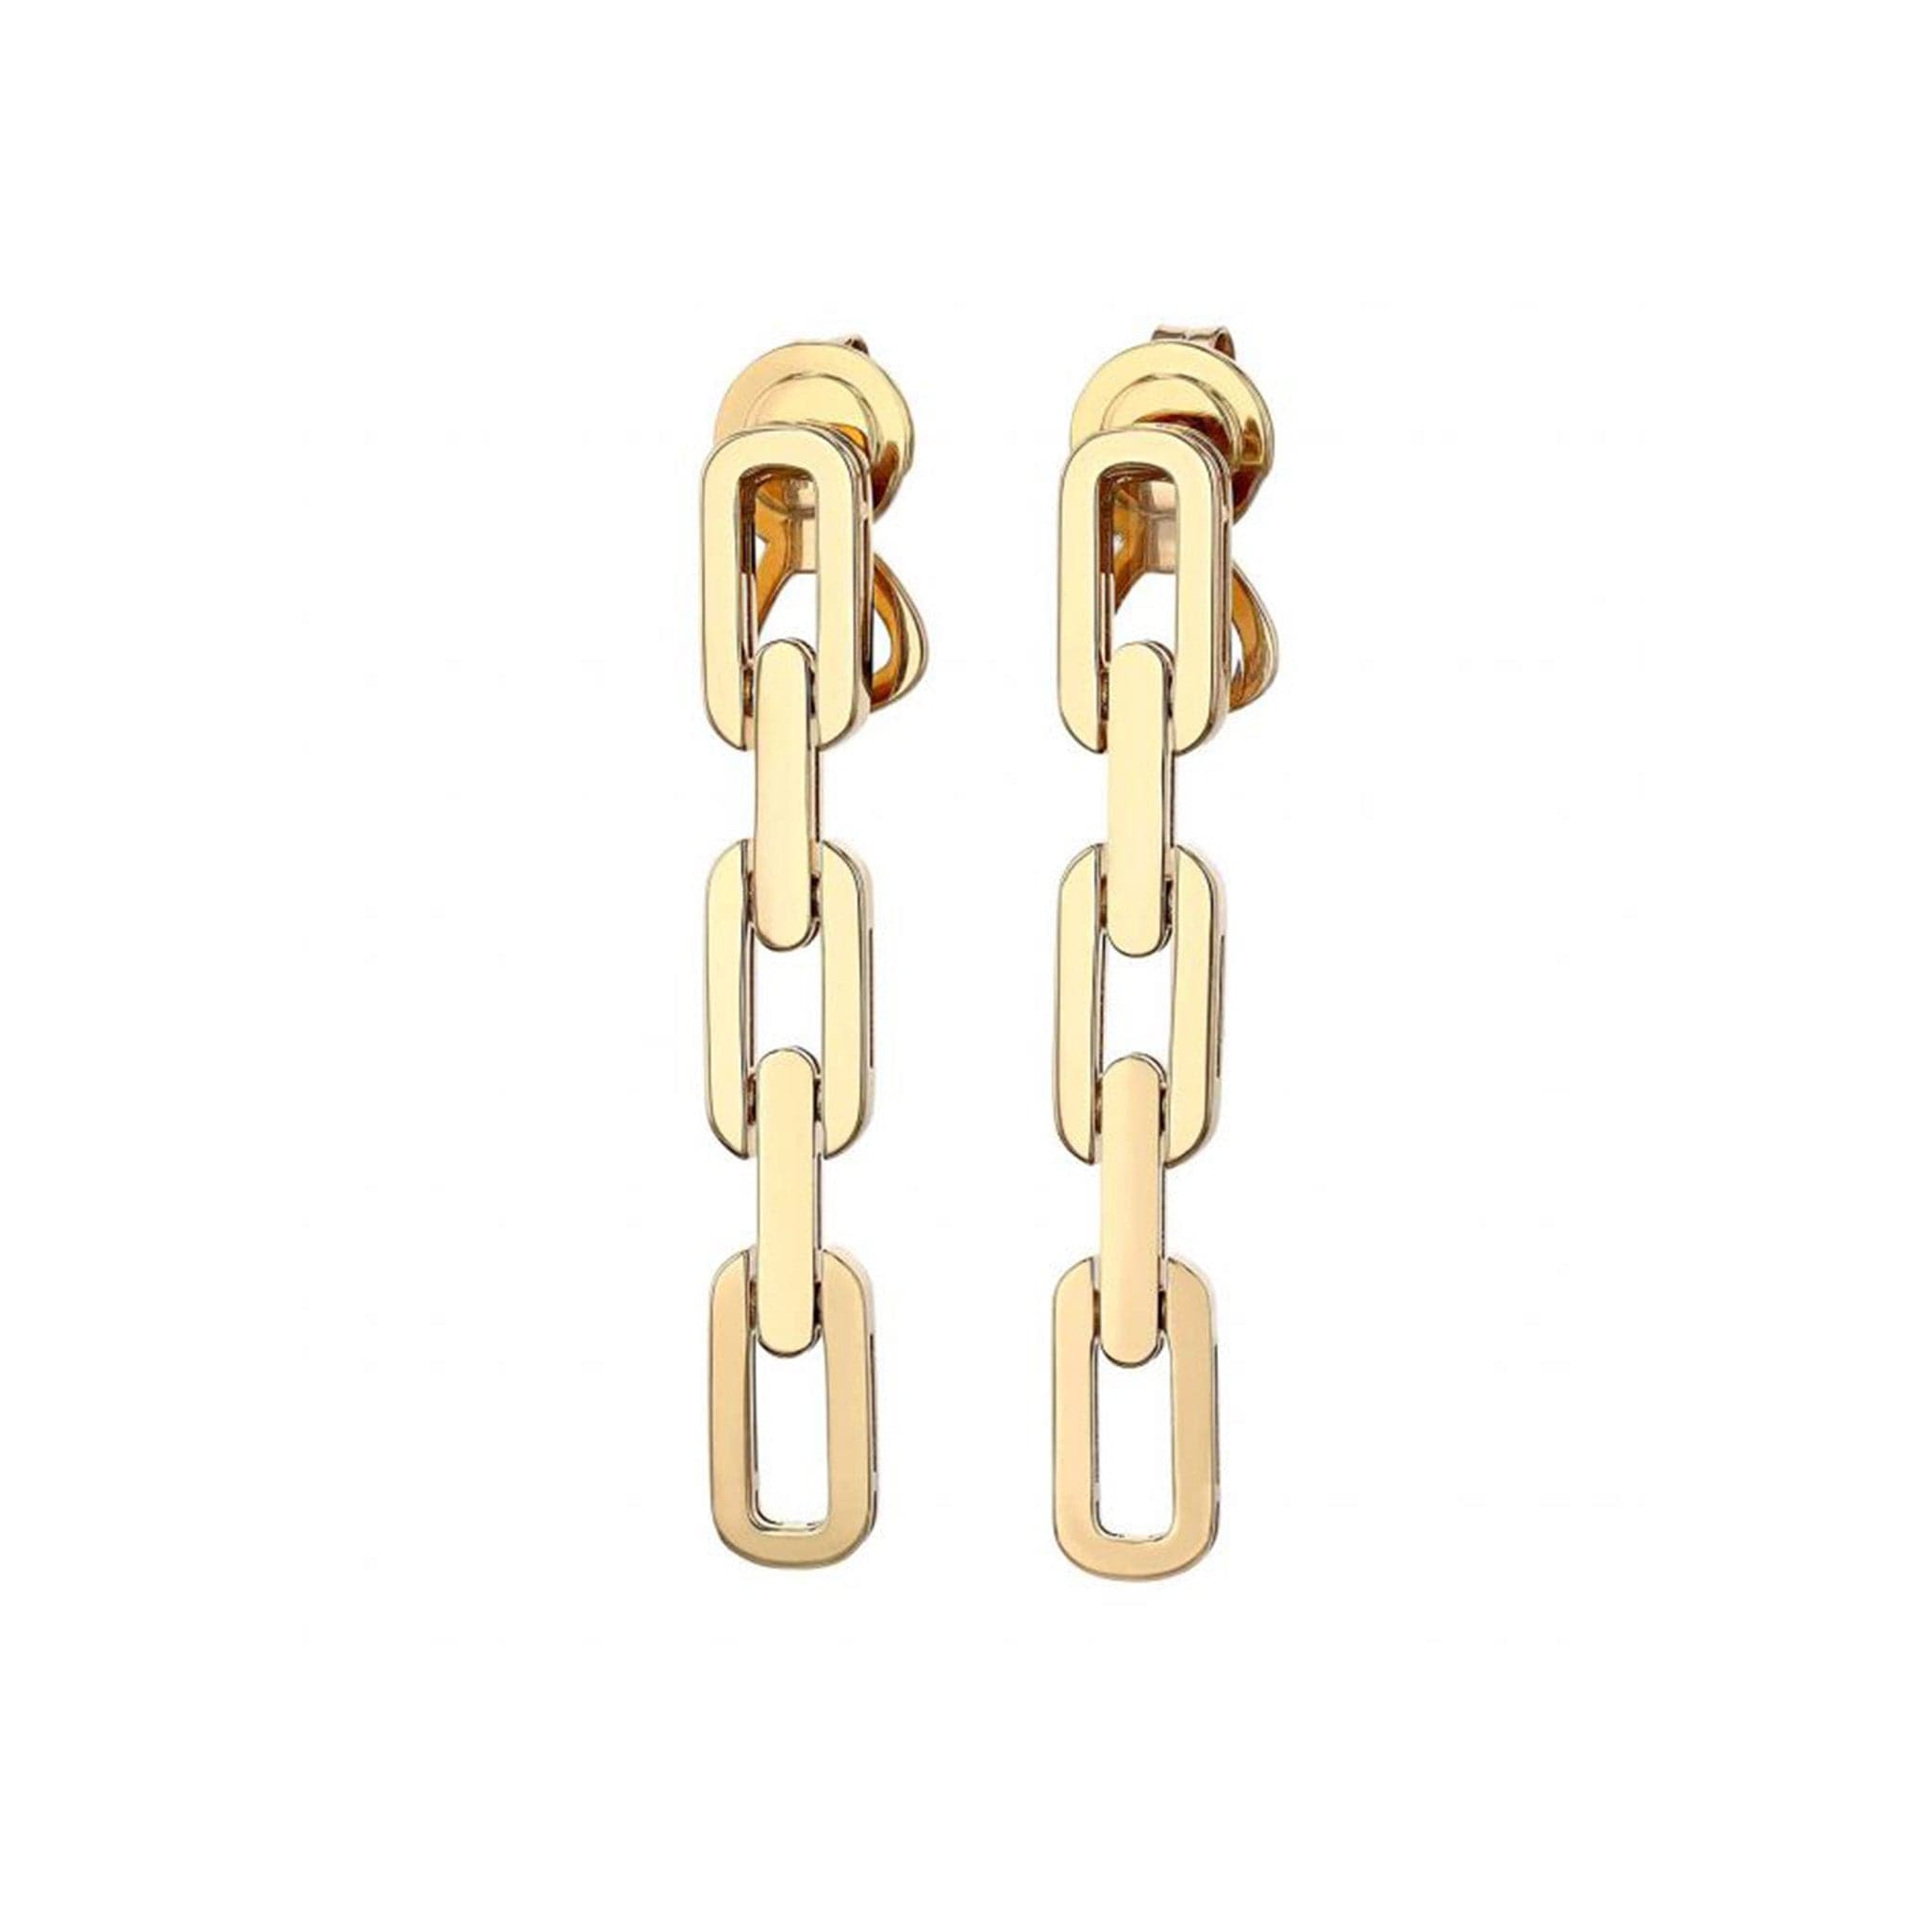 Louis Vuitton LV Volt Curb Chain Earrings in 18k Yellow Gold